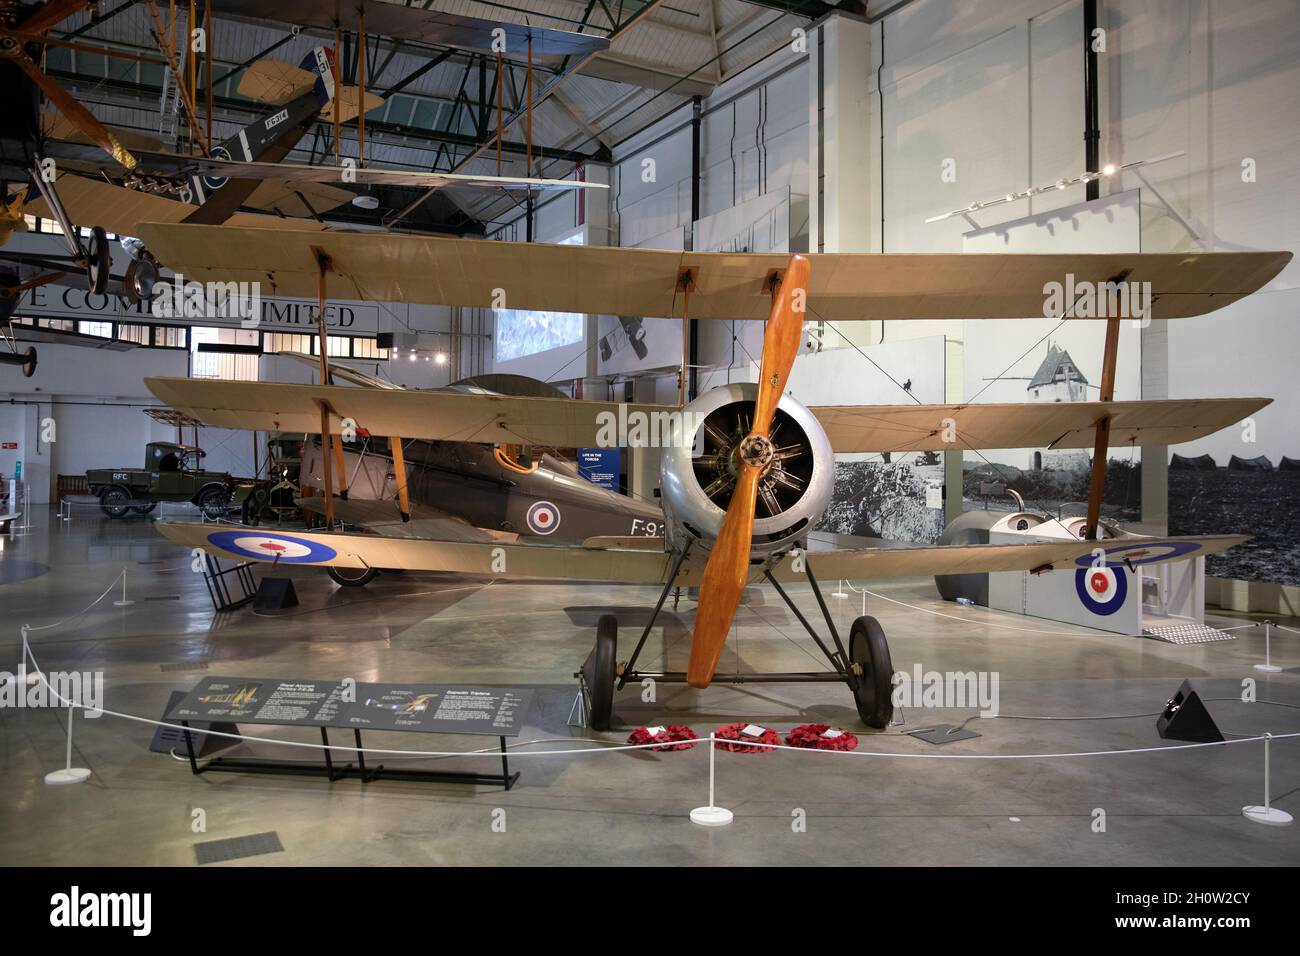 Museo Real de la Fuerza Aérea, Londres Foto de stock